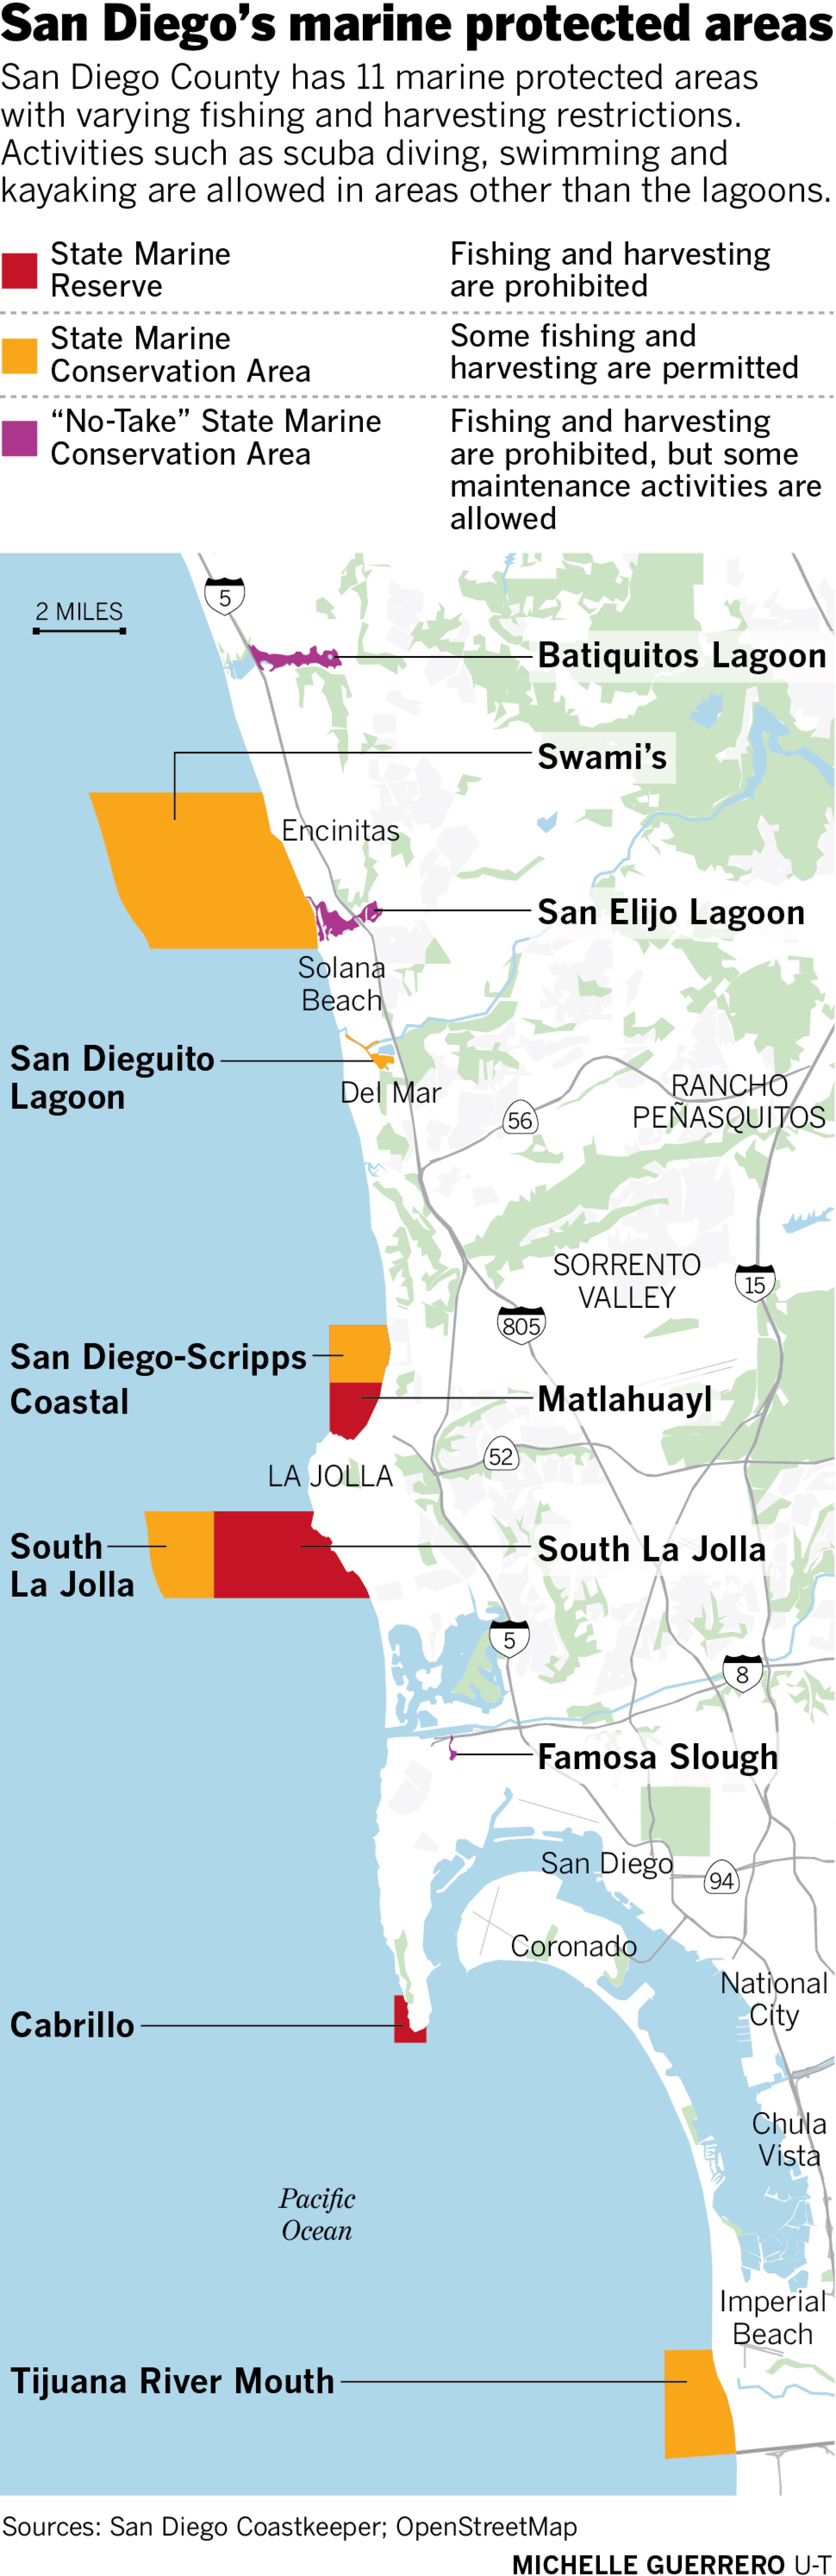 San Diego’s marine protected areas